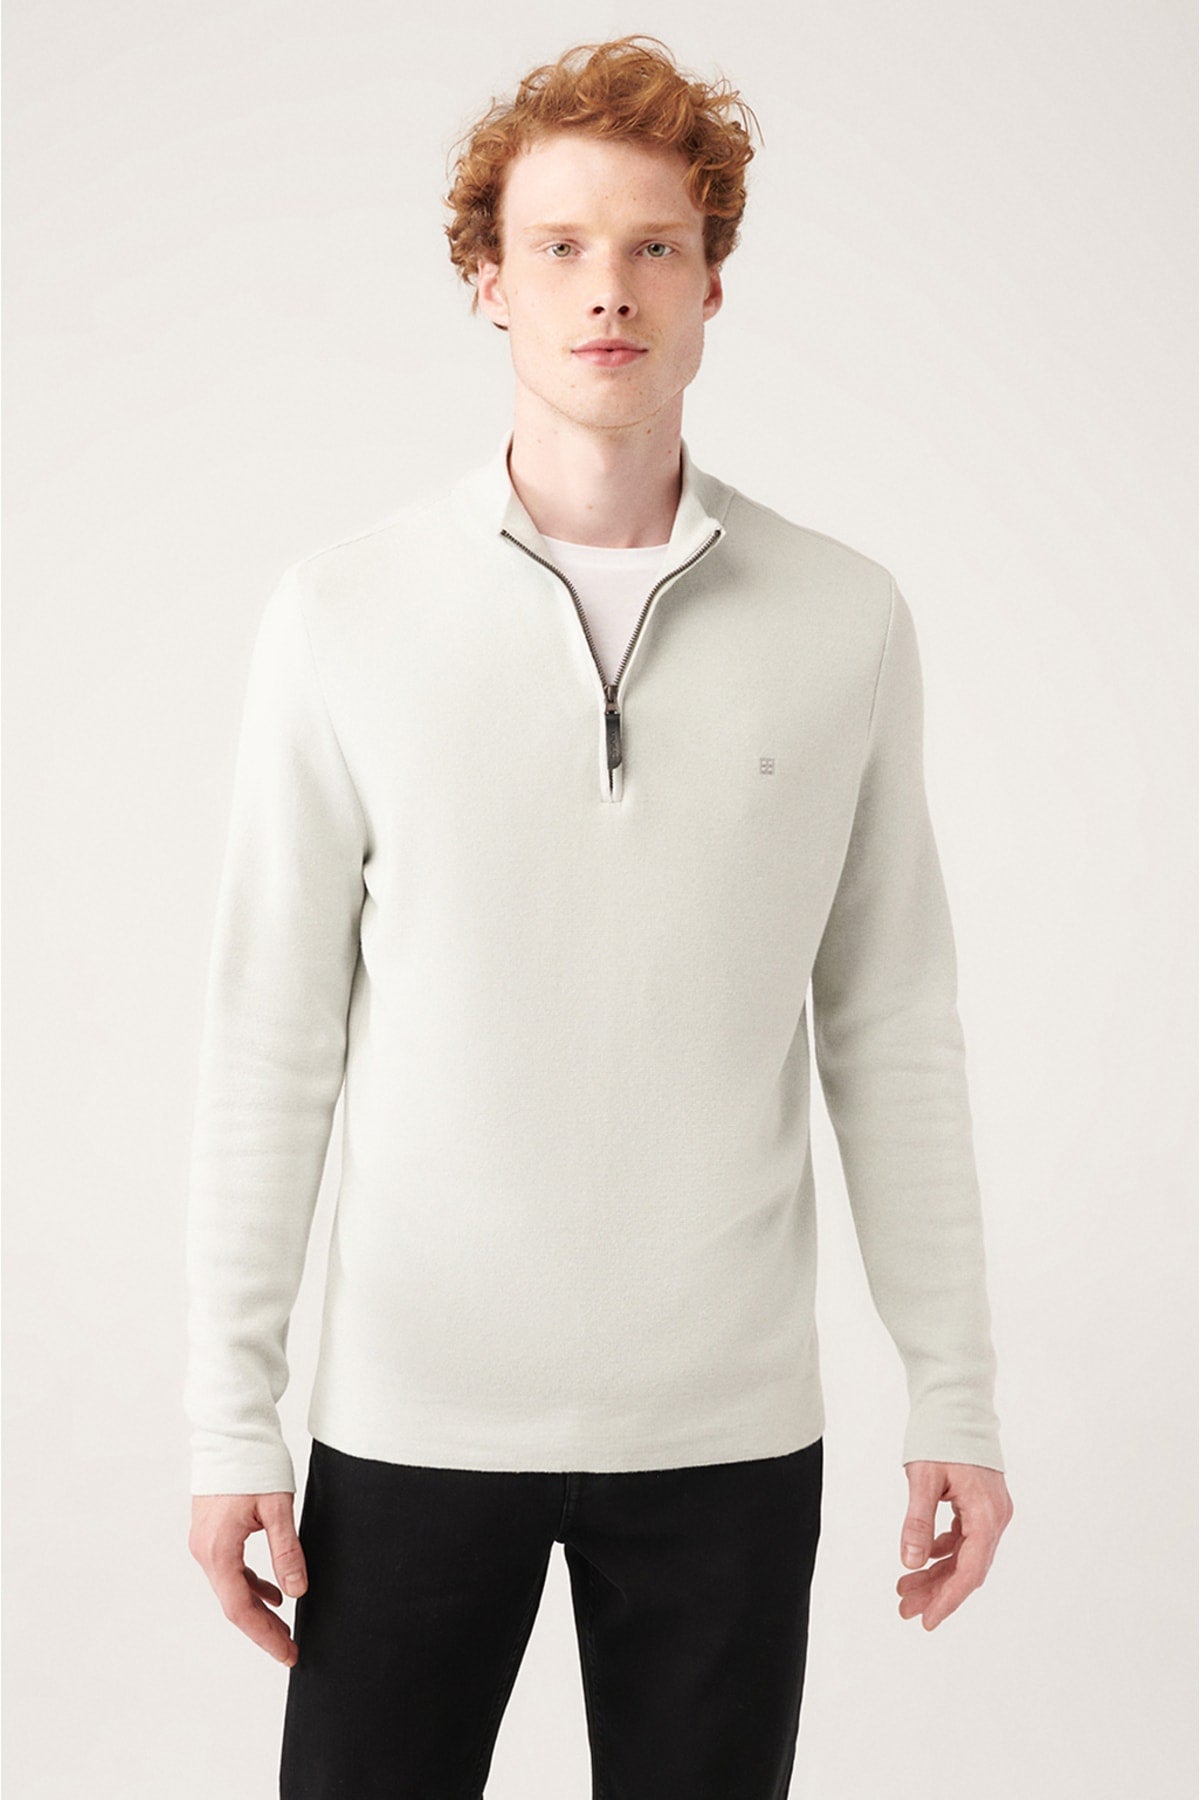 Men's light gray upright collar zipper regular fit knitwear sweater a31y5012